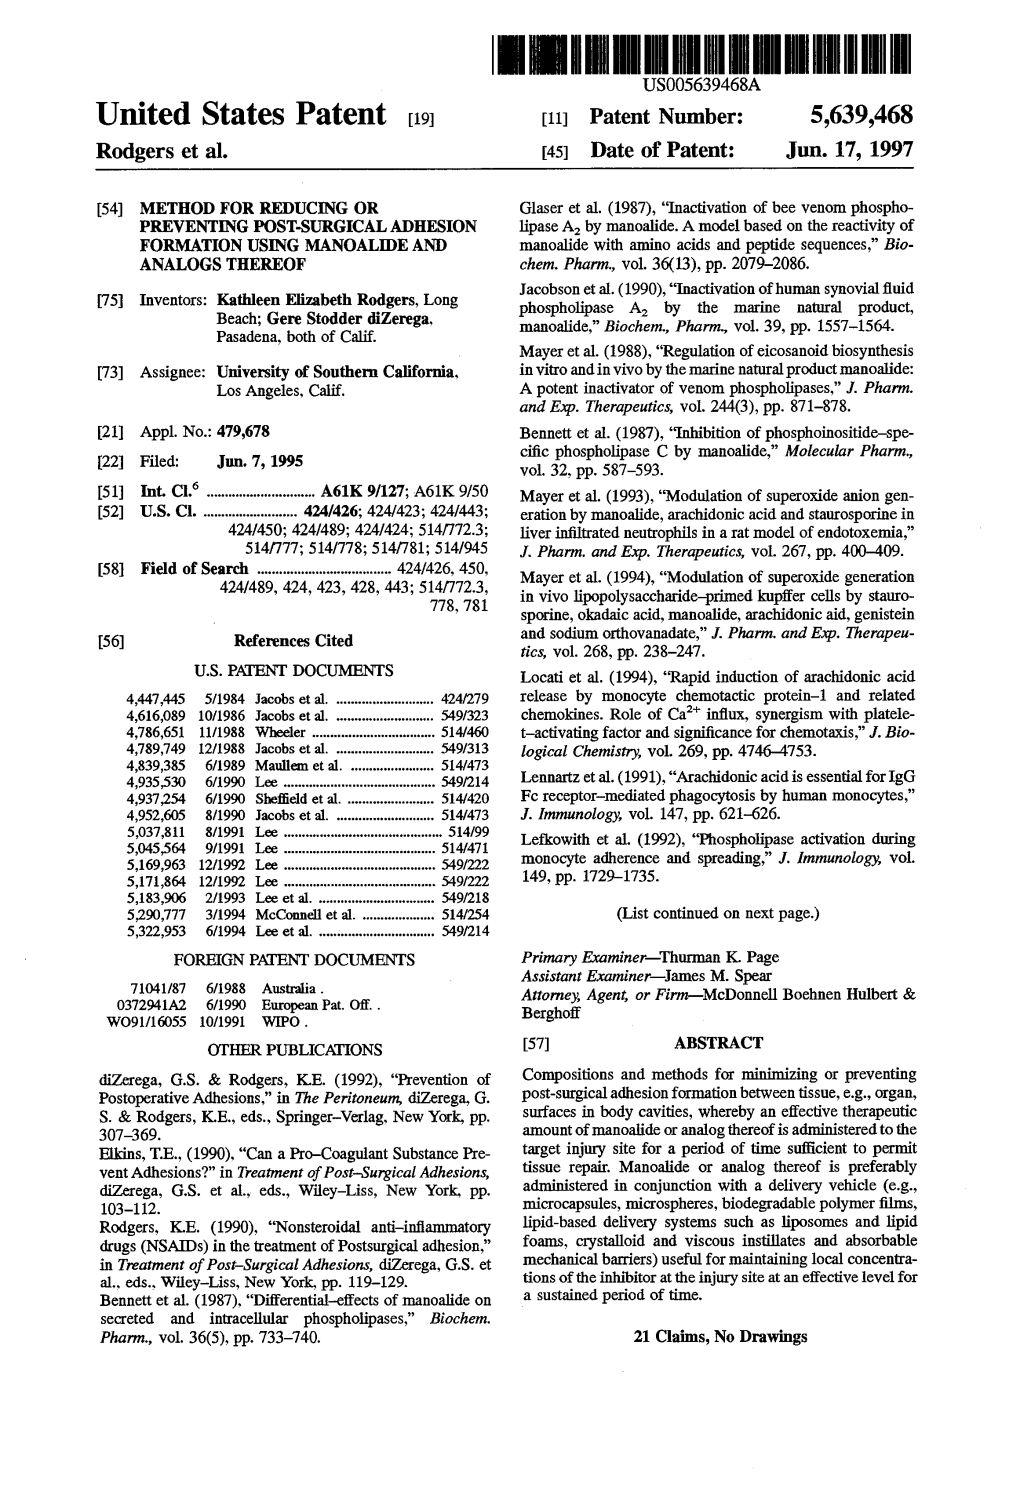 United States Patent (19) 11 Patent Number: 5,639,468 Rodgers Et Al